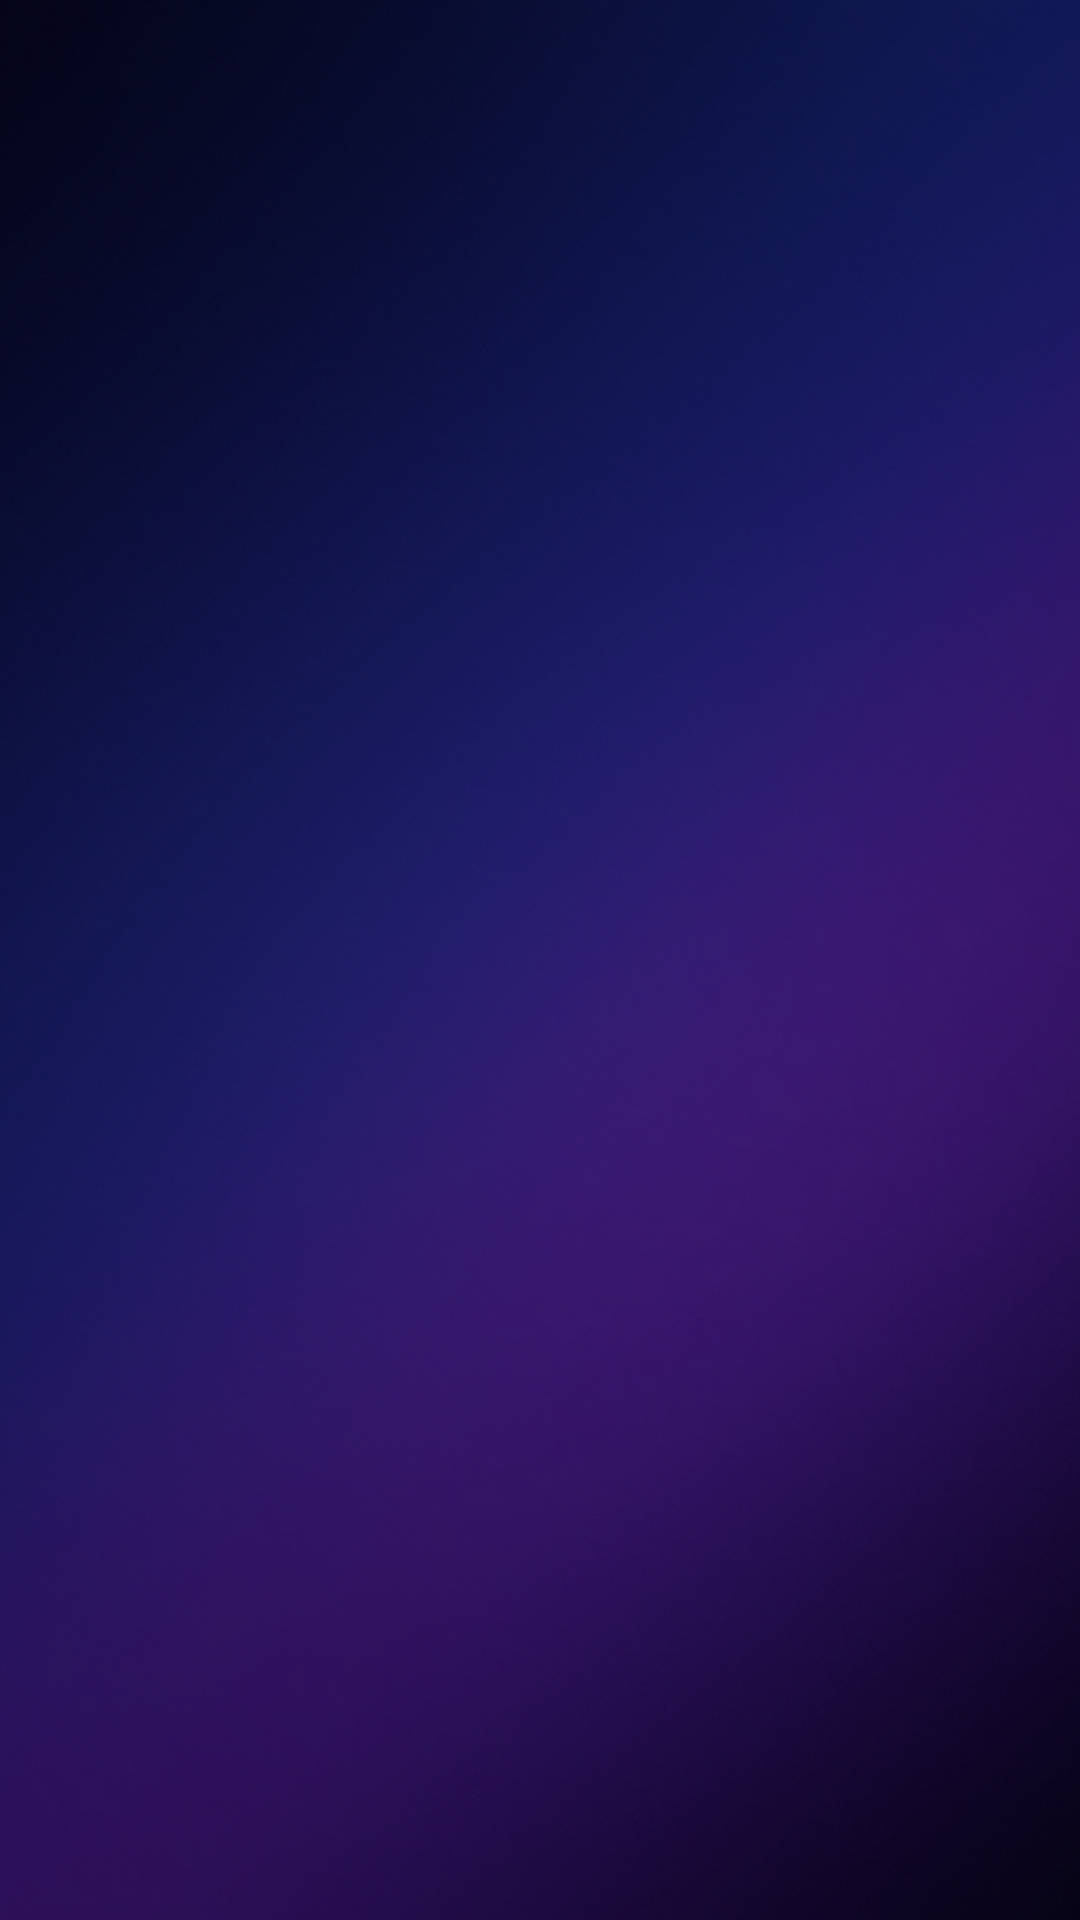 Papelde Parede Galaxy S10 Azul E Violeta. Papel de Parede